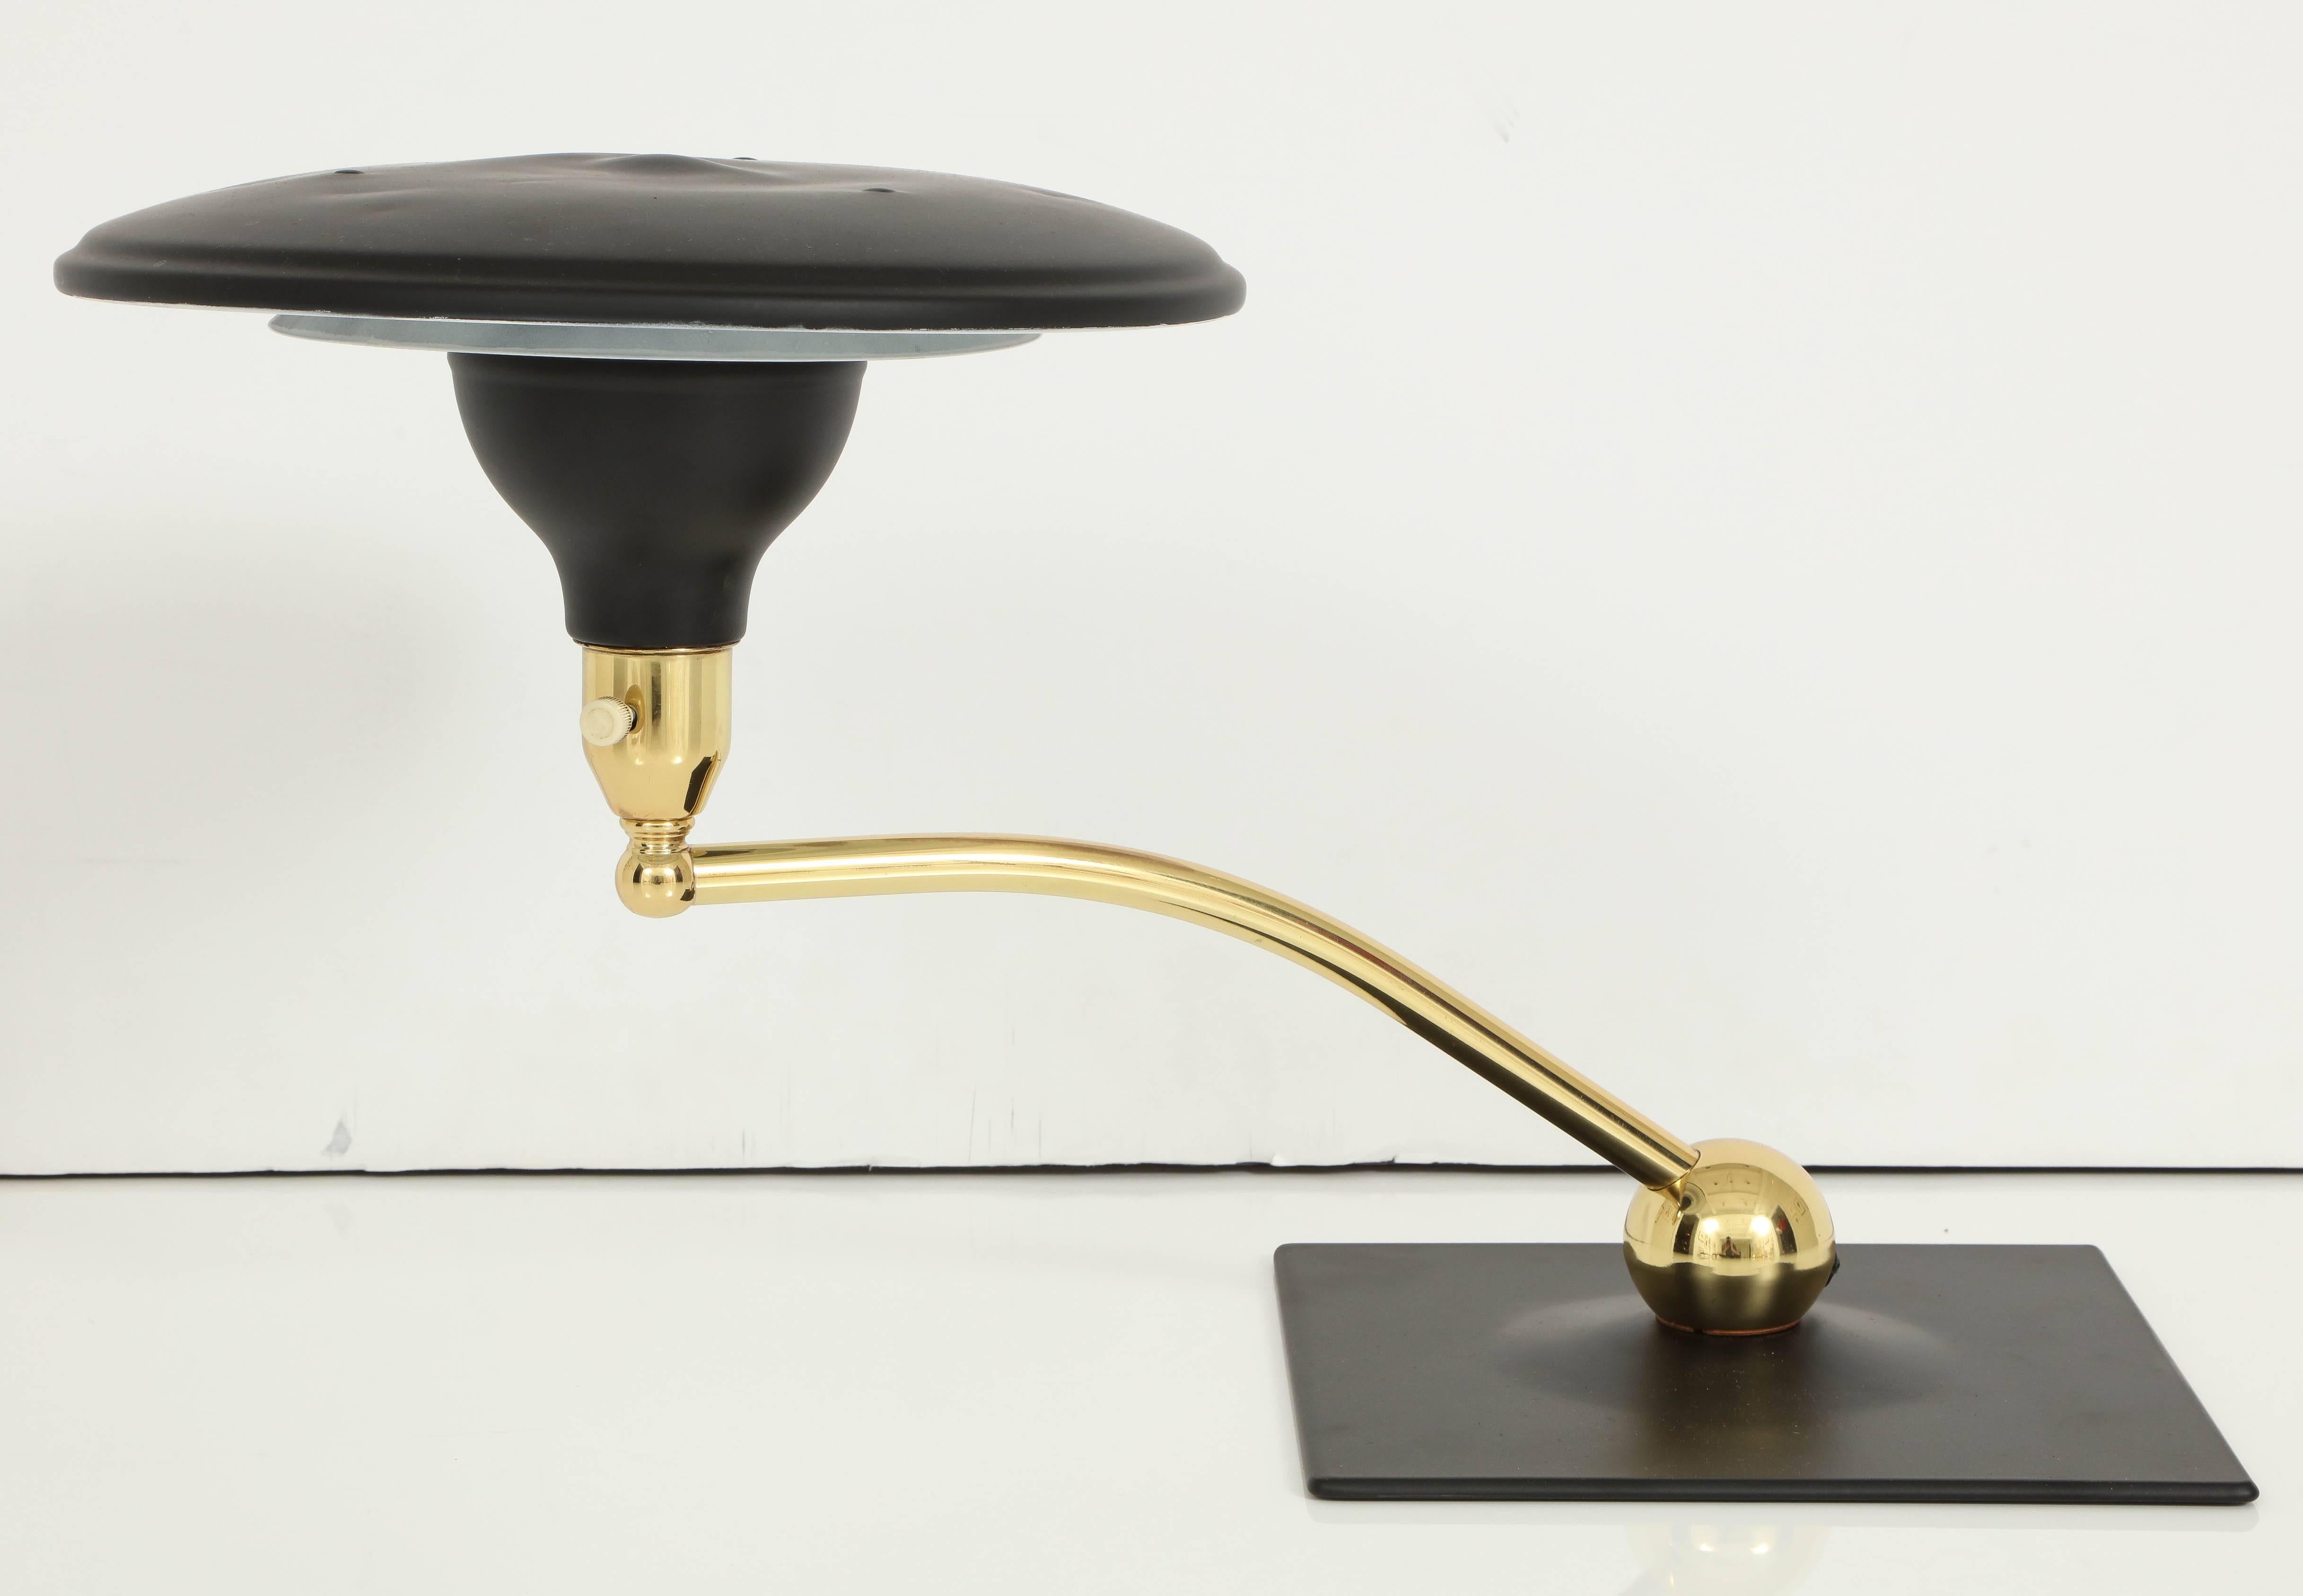 1930s streamline cantilever design desk lamp with restored flat black and polished brass finish.